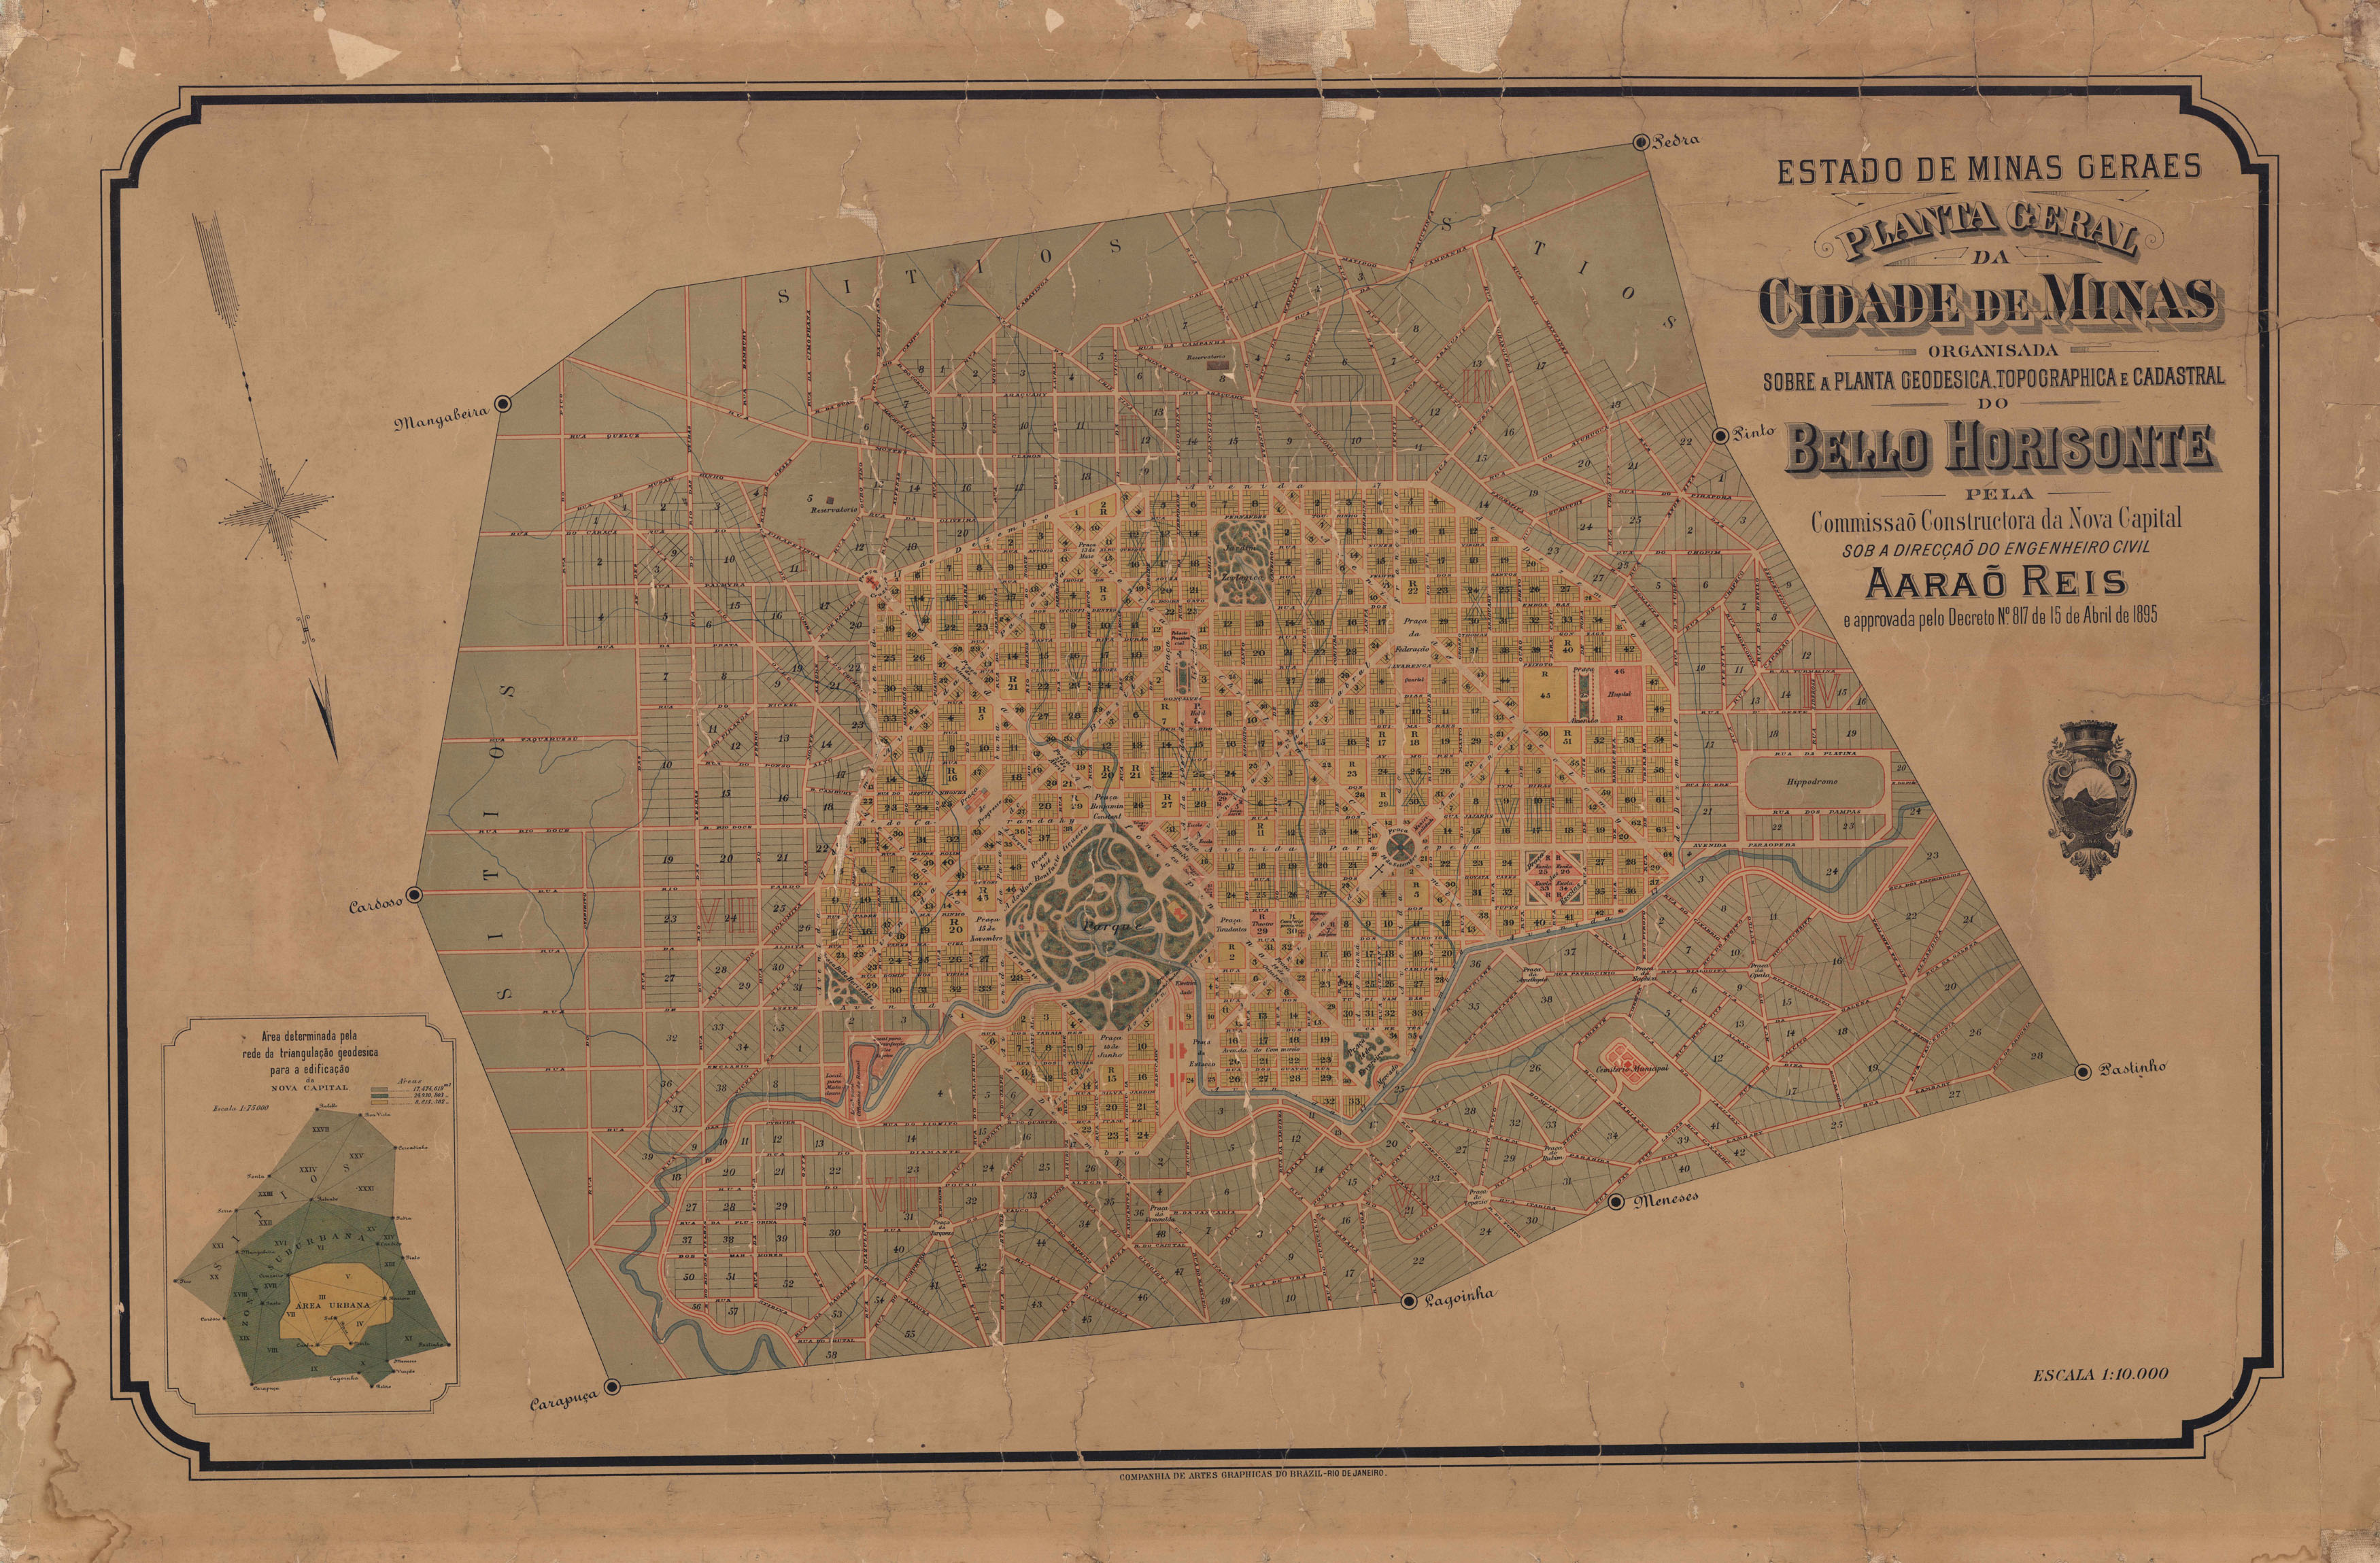 Original plan for Belo Horizonte, 1893.